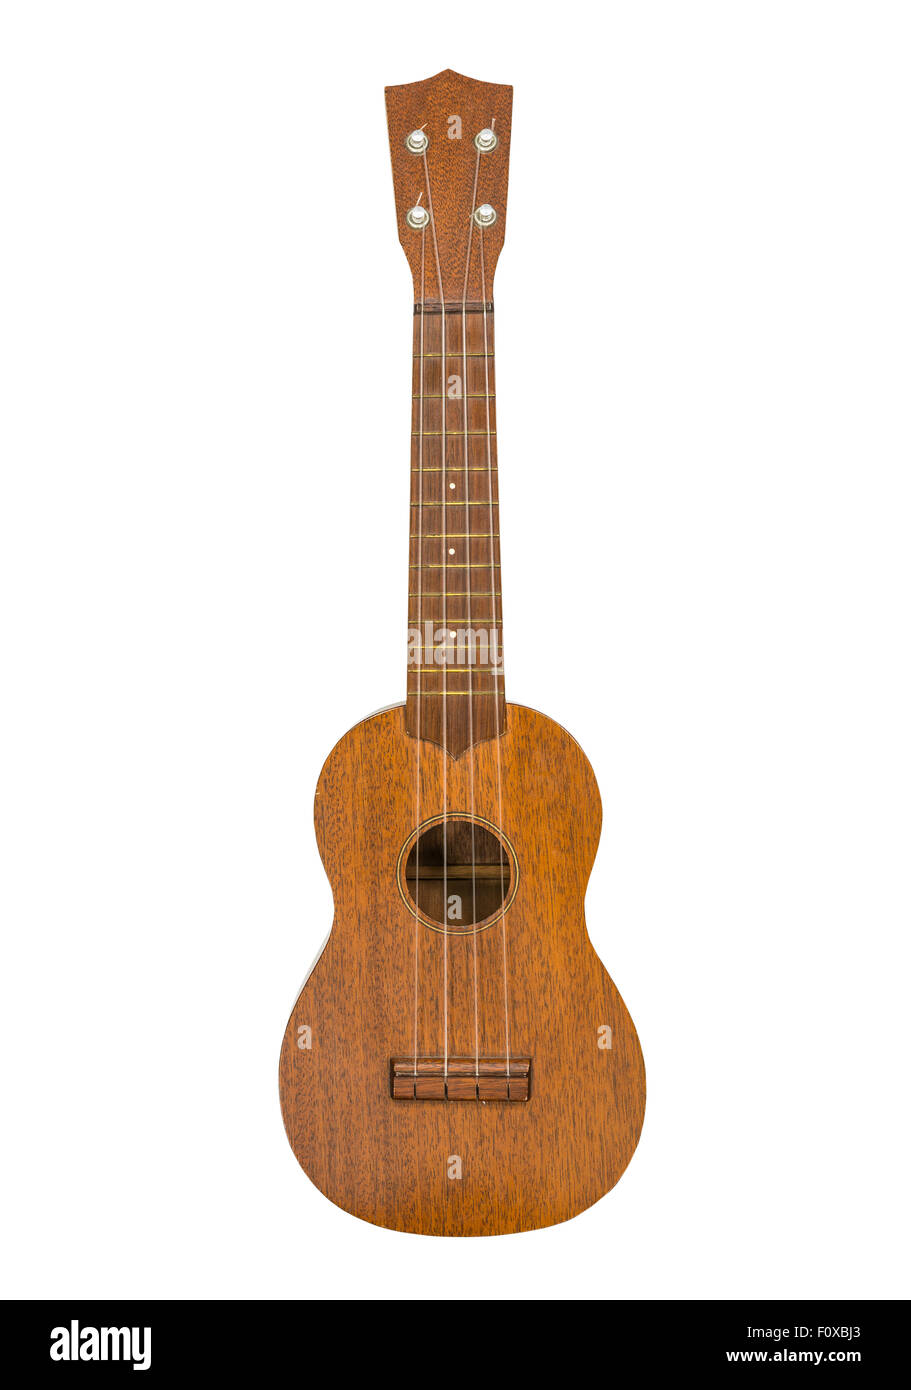 Toy ukulele guitar isolated with clipping path. Stock Photo